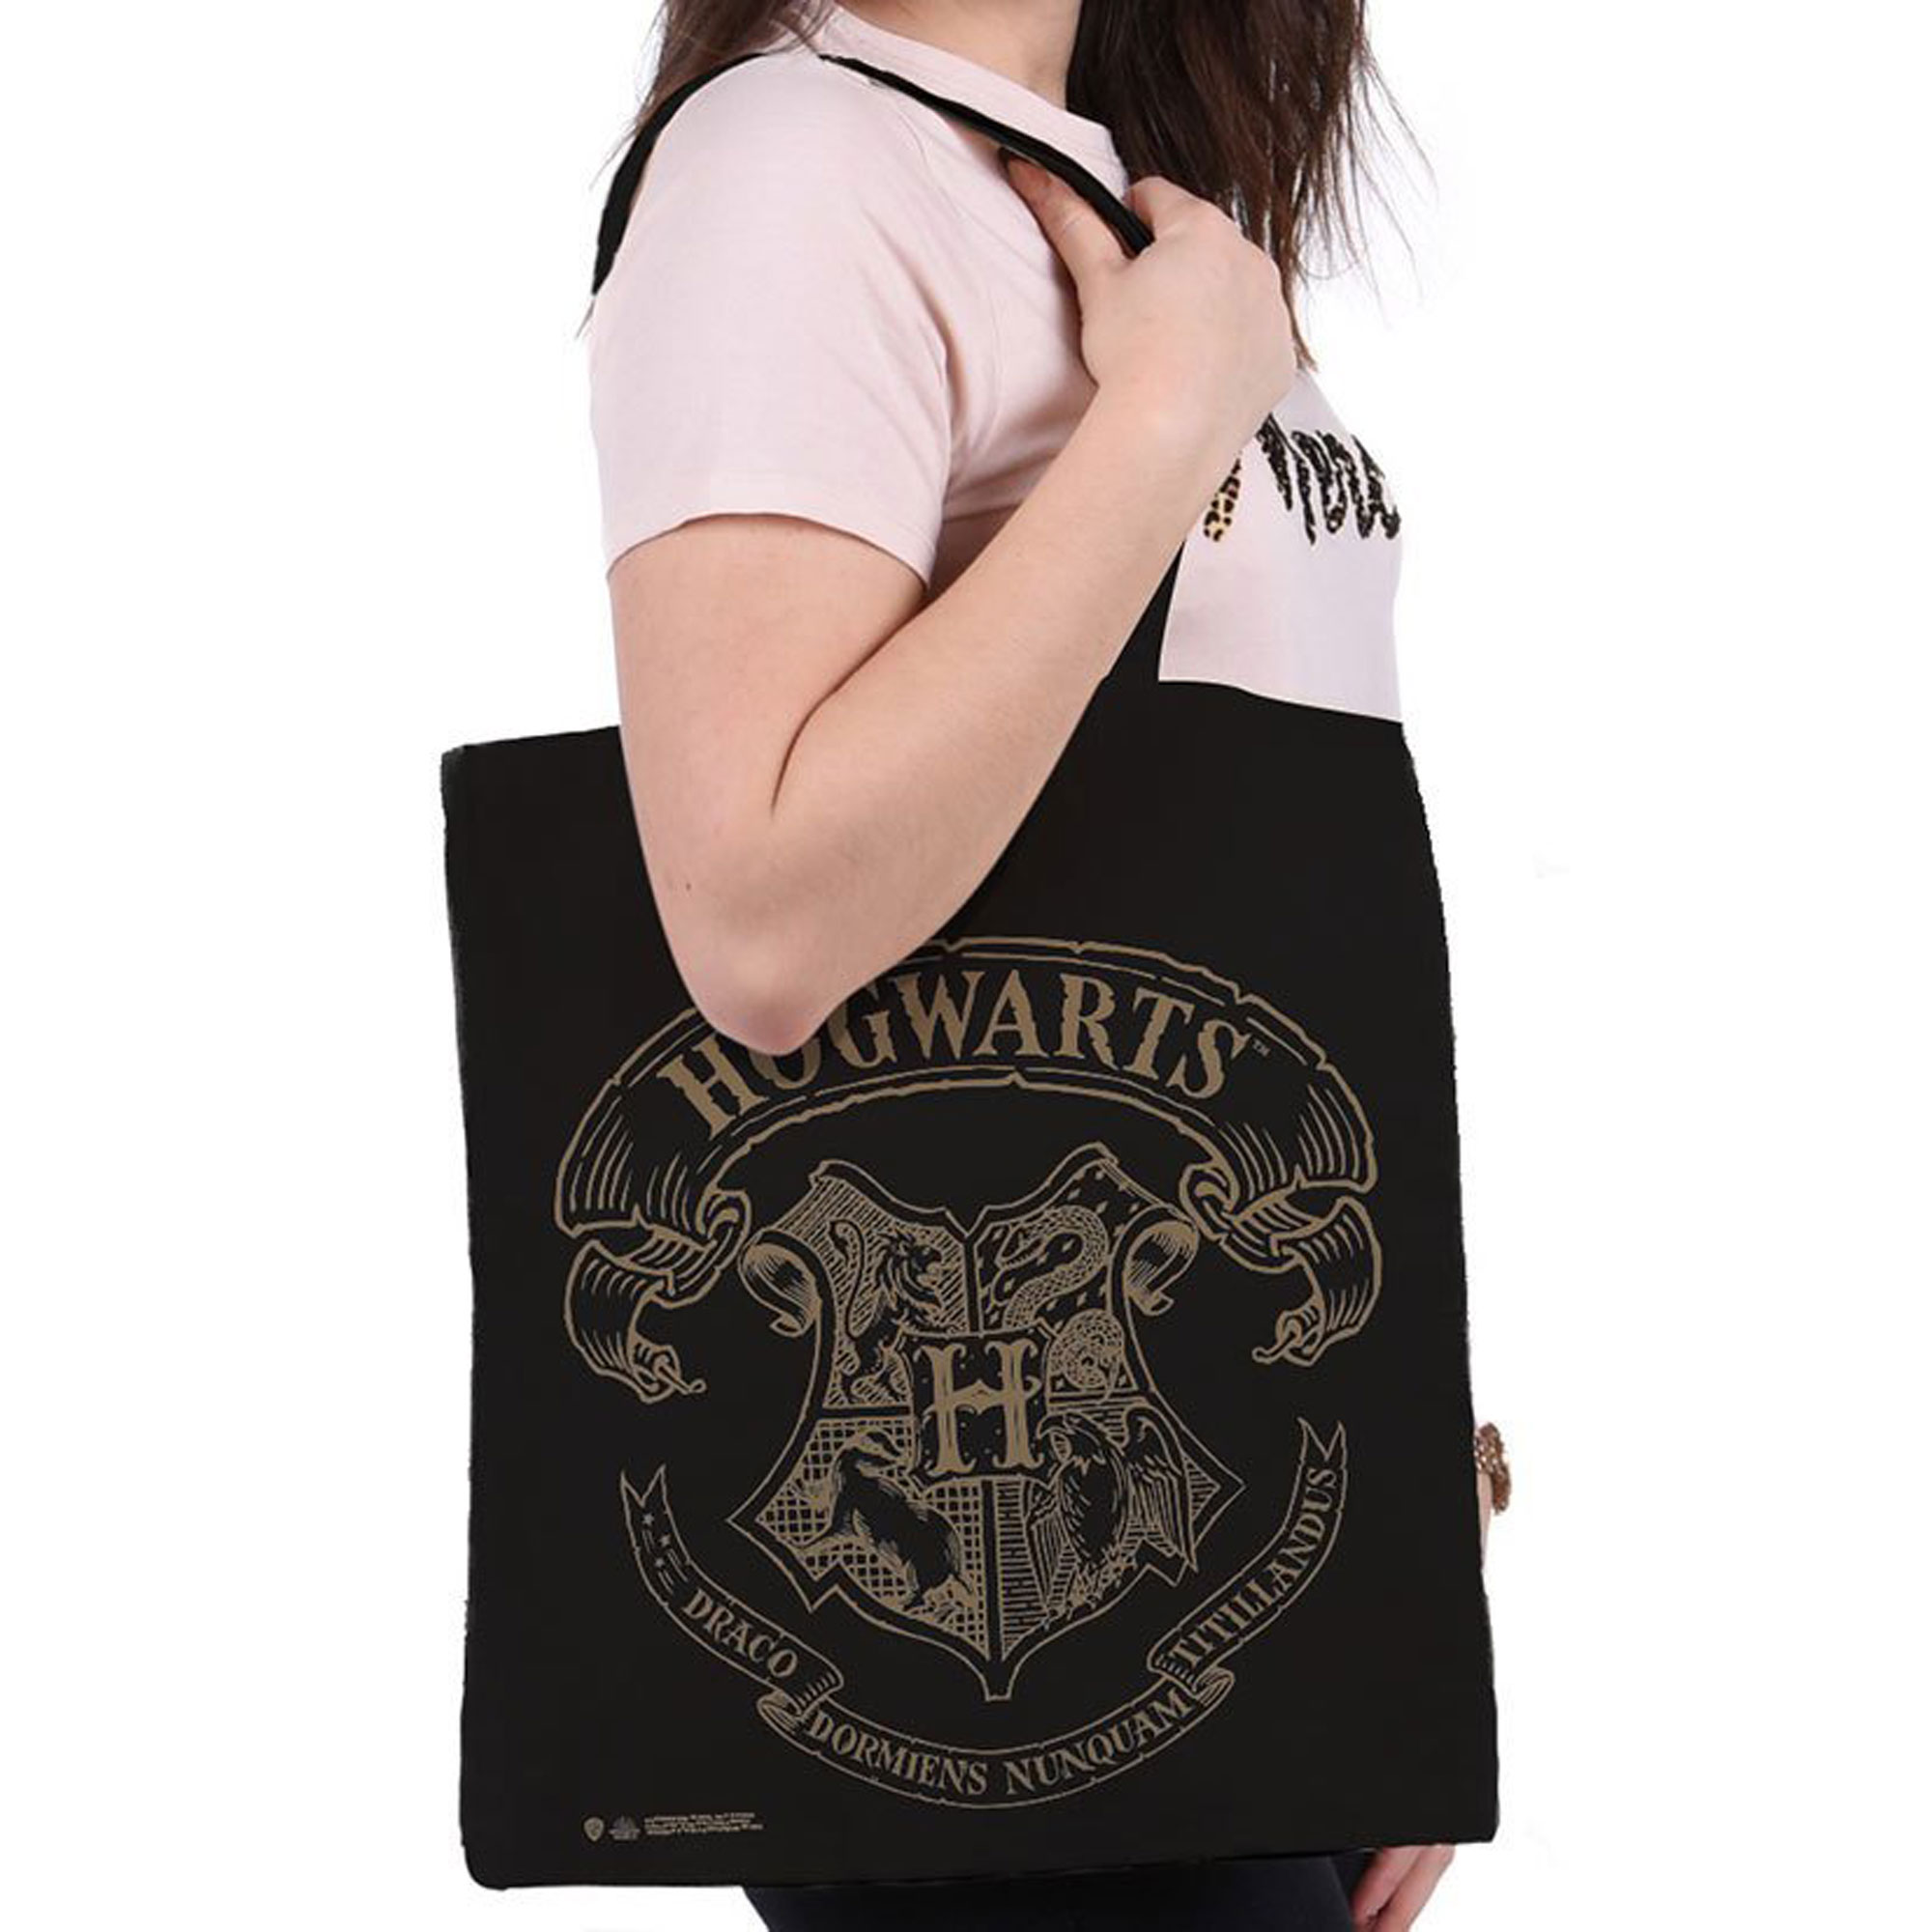 Harry Hogwarts Tasche - Potter - Shopper